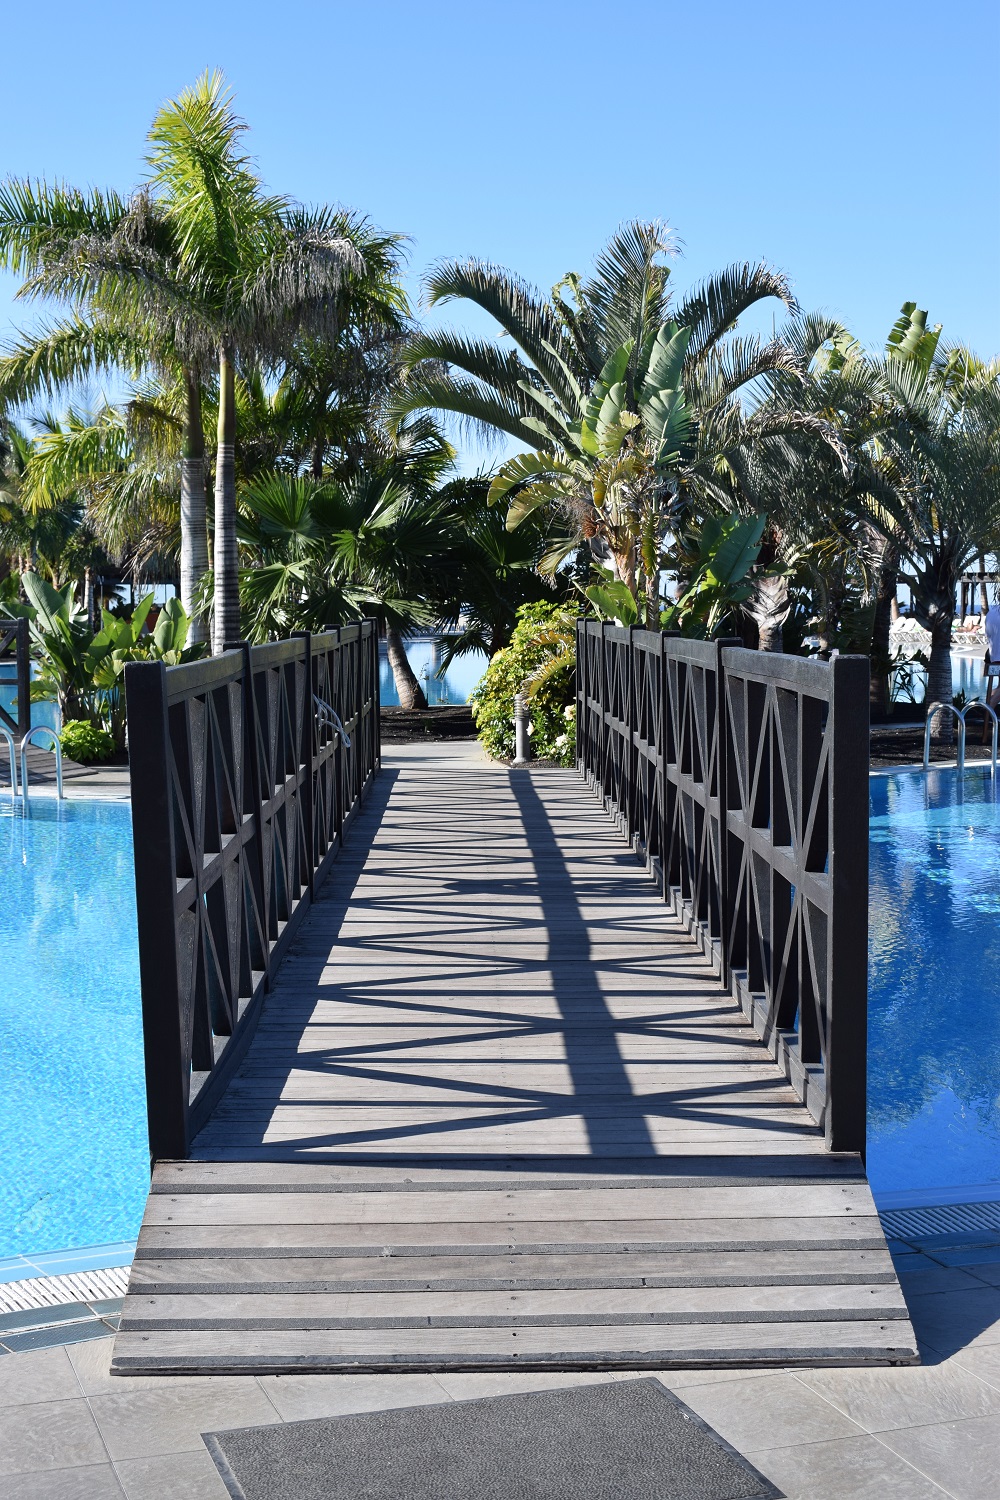 Die Reise nach La Palma - Teil 2 Brücke über Pool Hotel La Palma Princess - Sunnyside-of-life